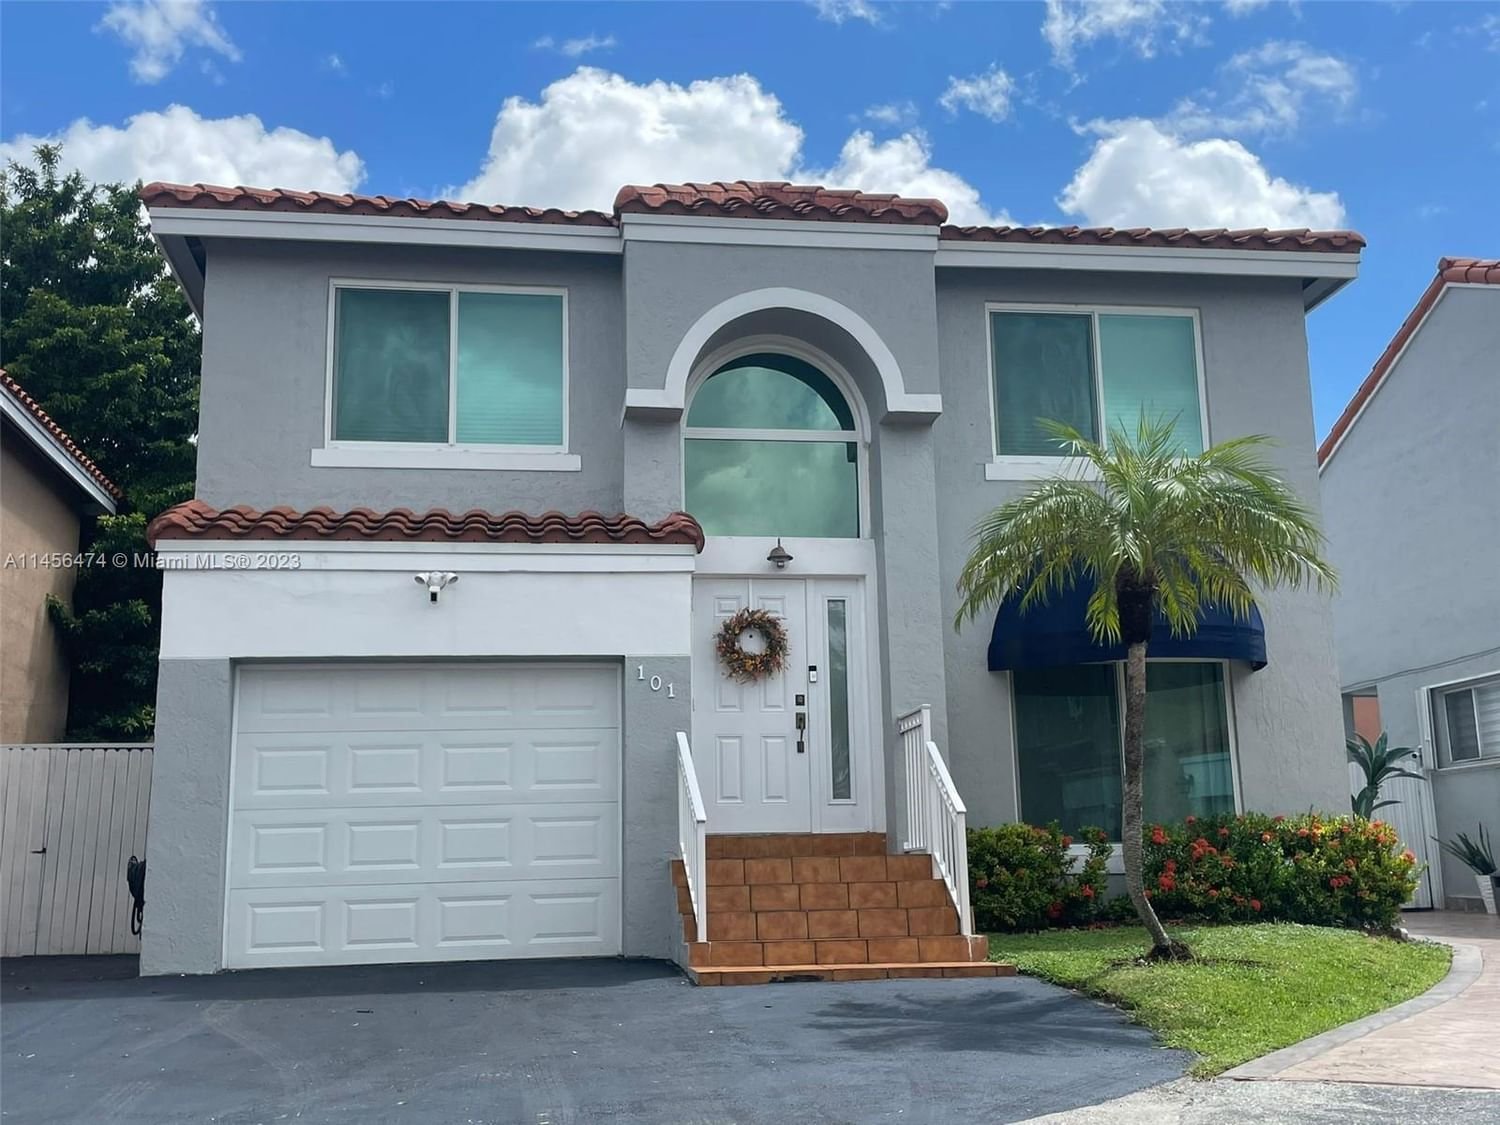 Real estate property located at 101 85th Pl, Miami-Dade County, Miami, FL